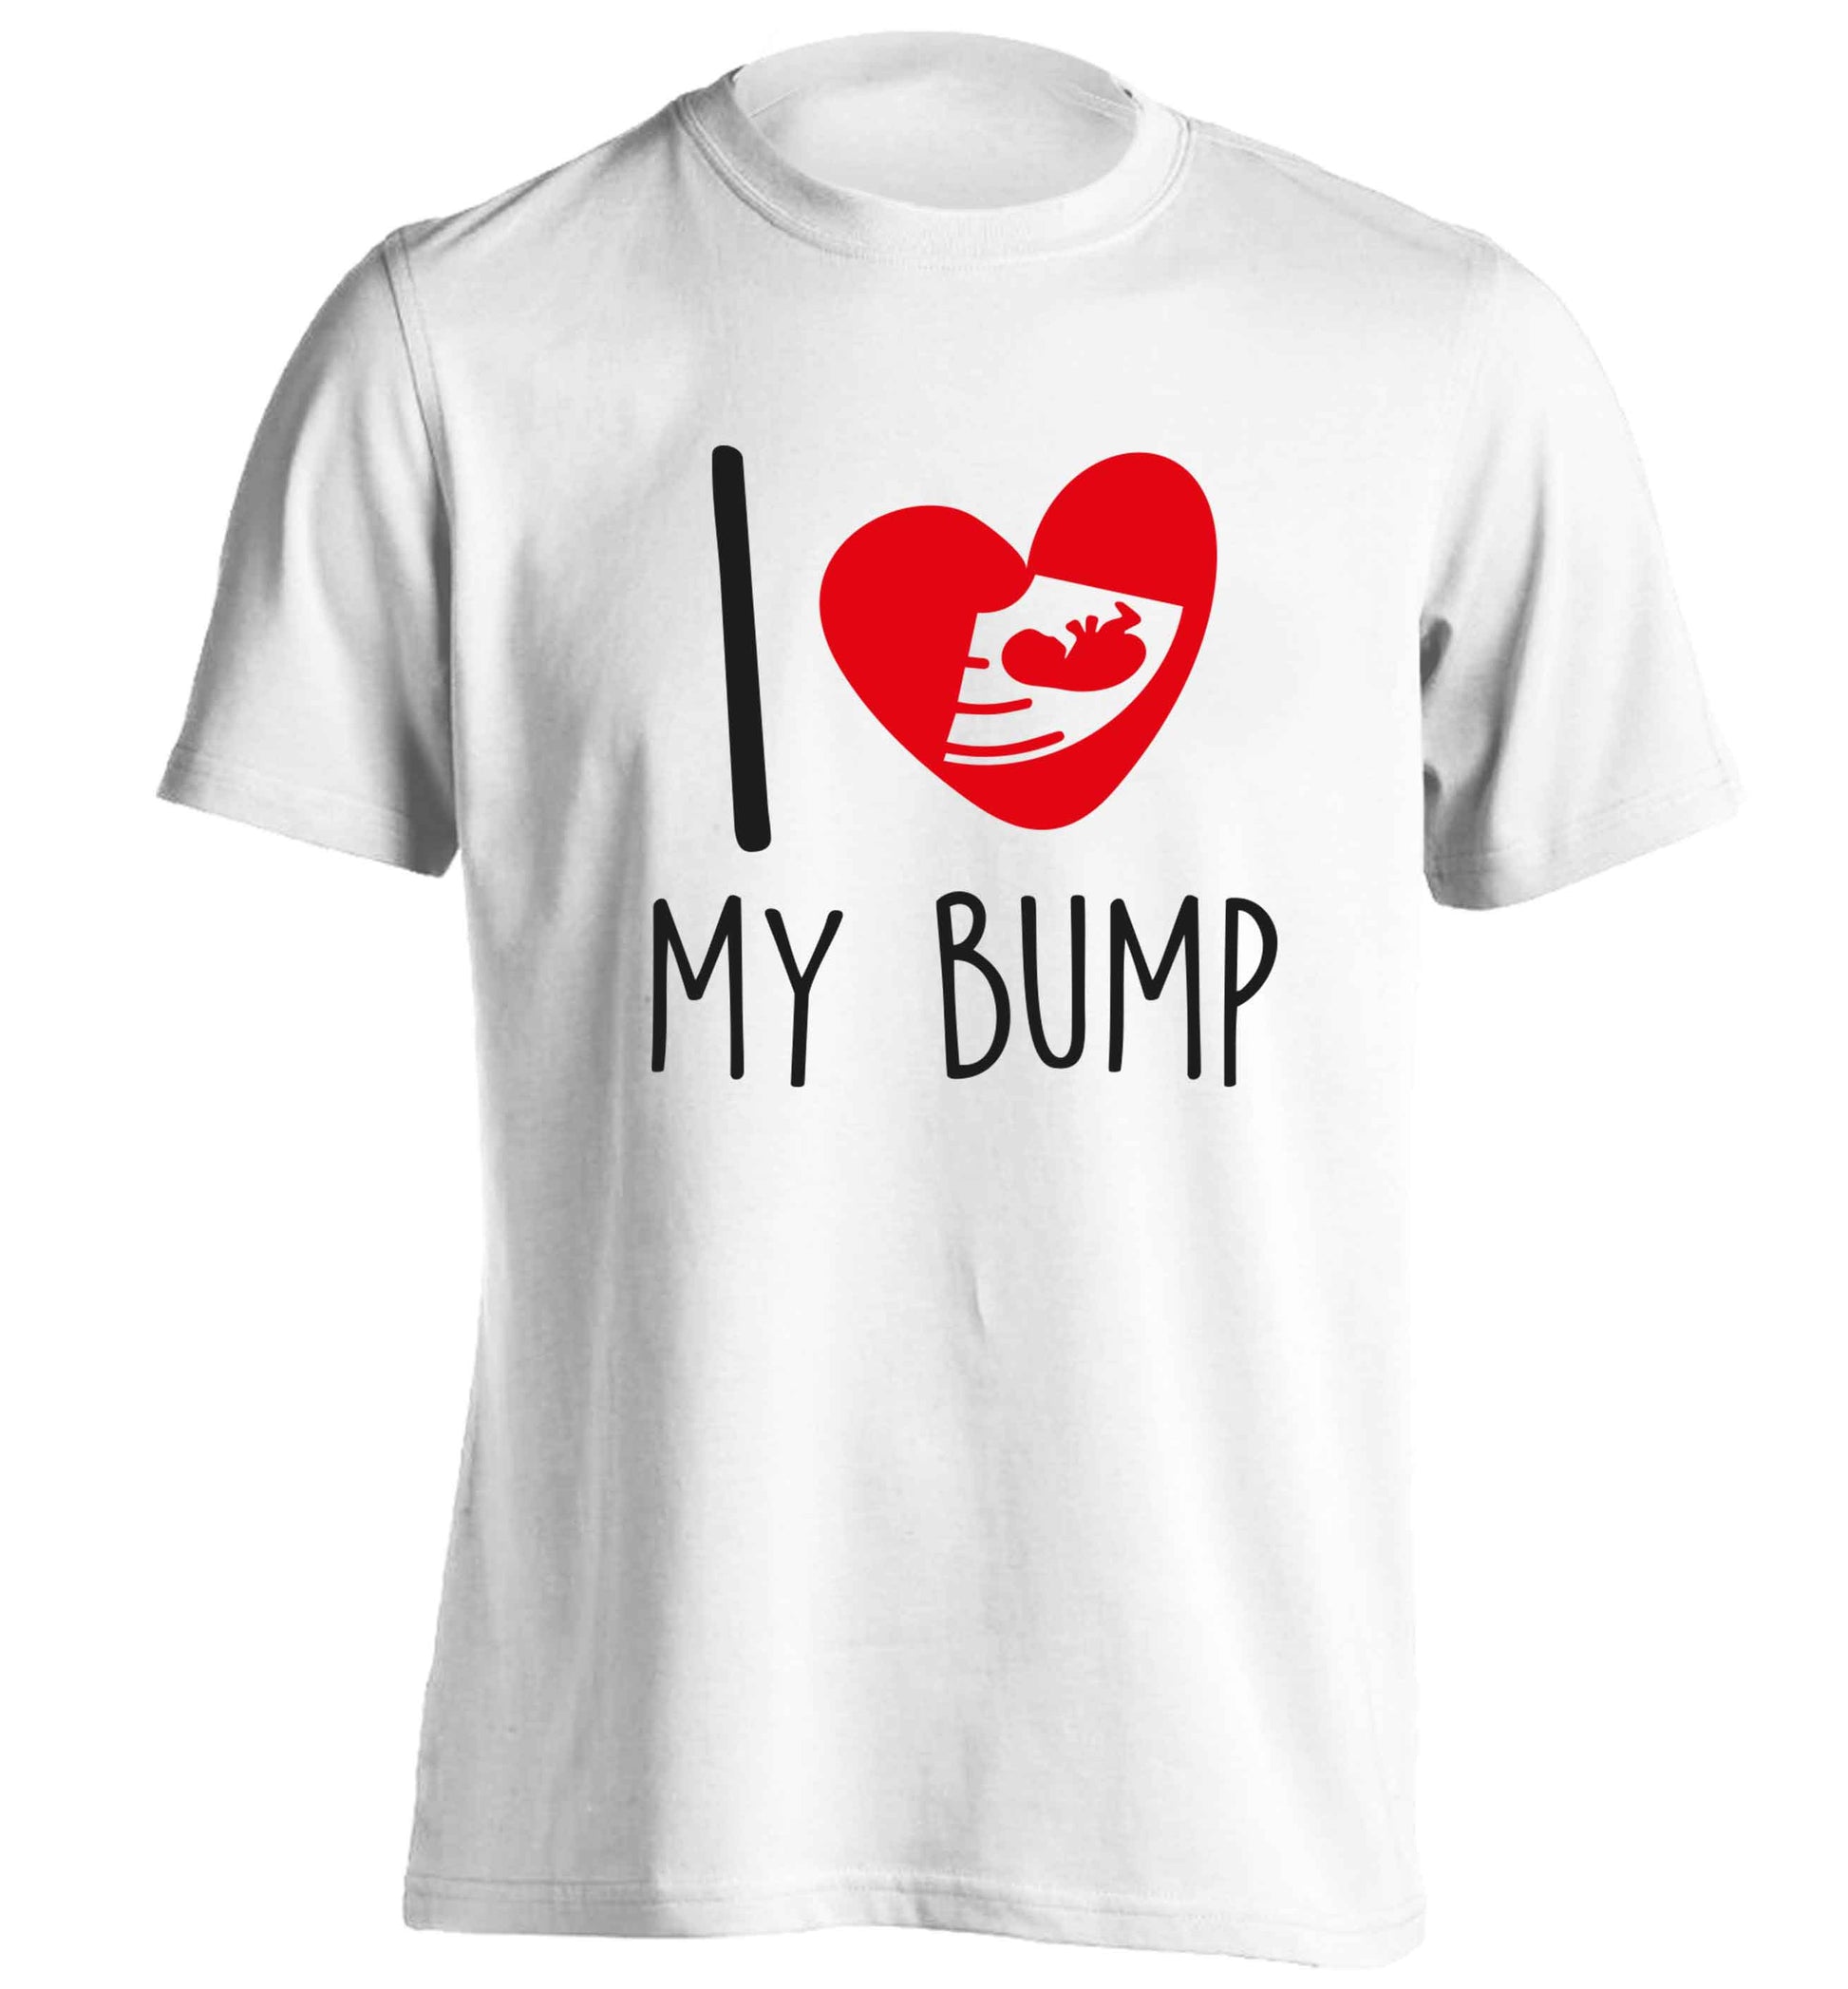 I love my bump adults unisex white Tshirt 2XL